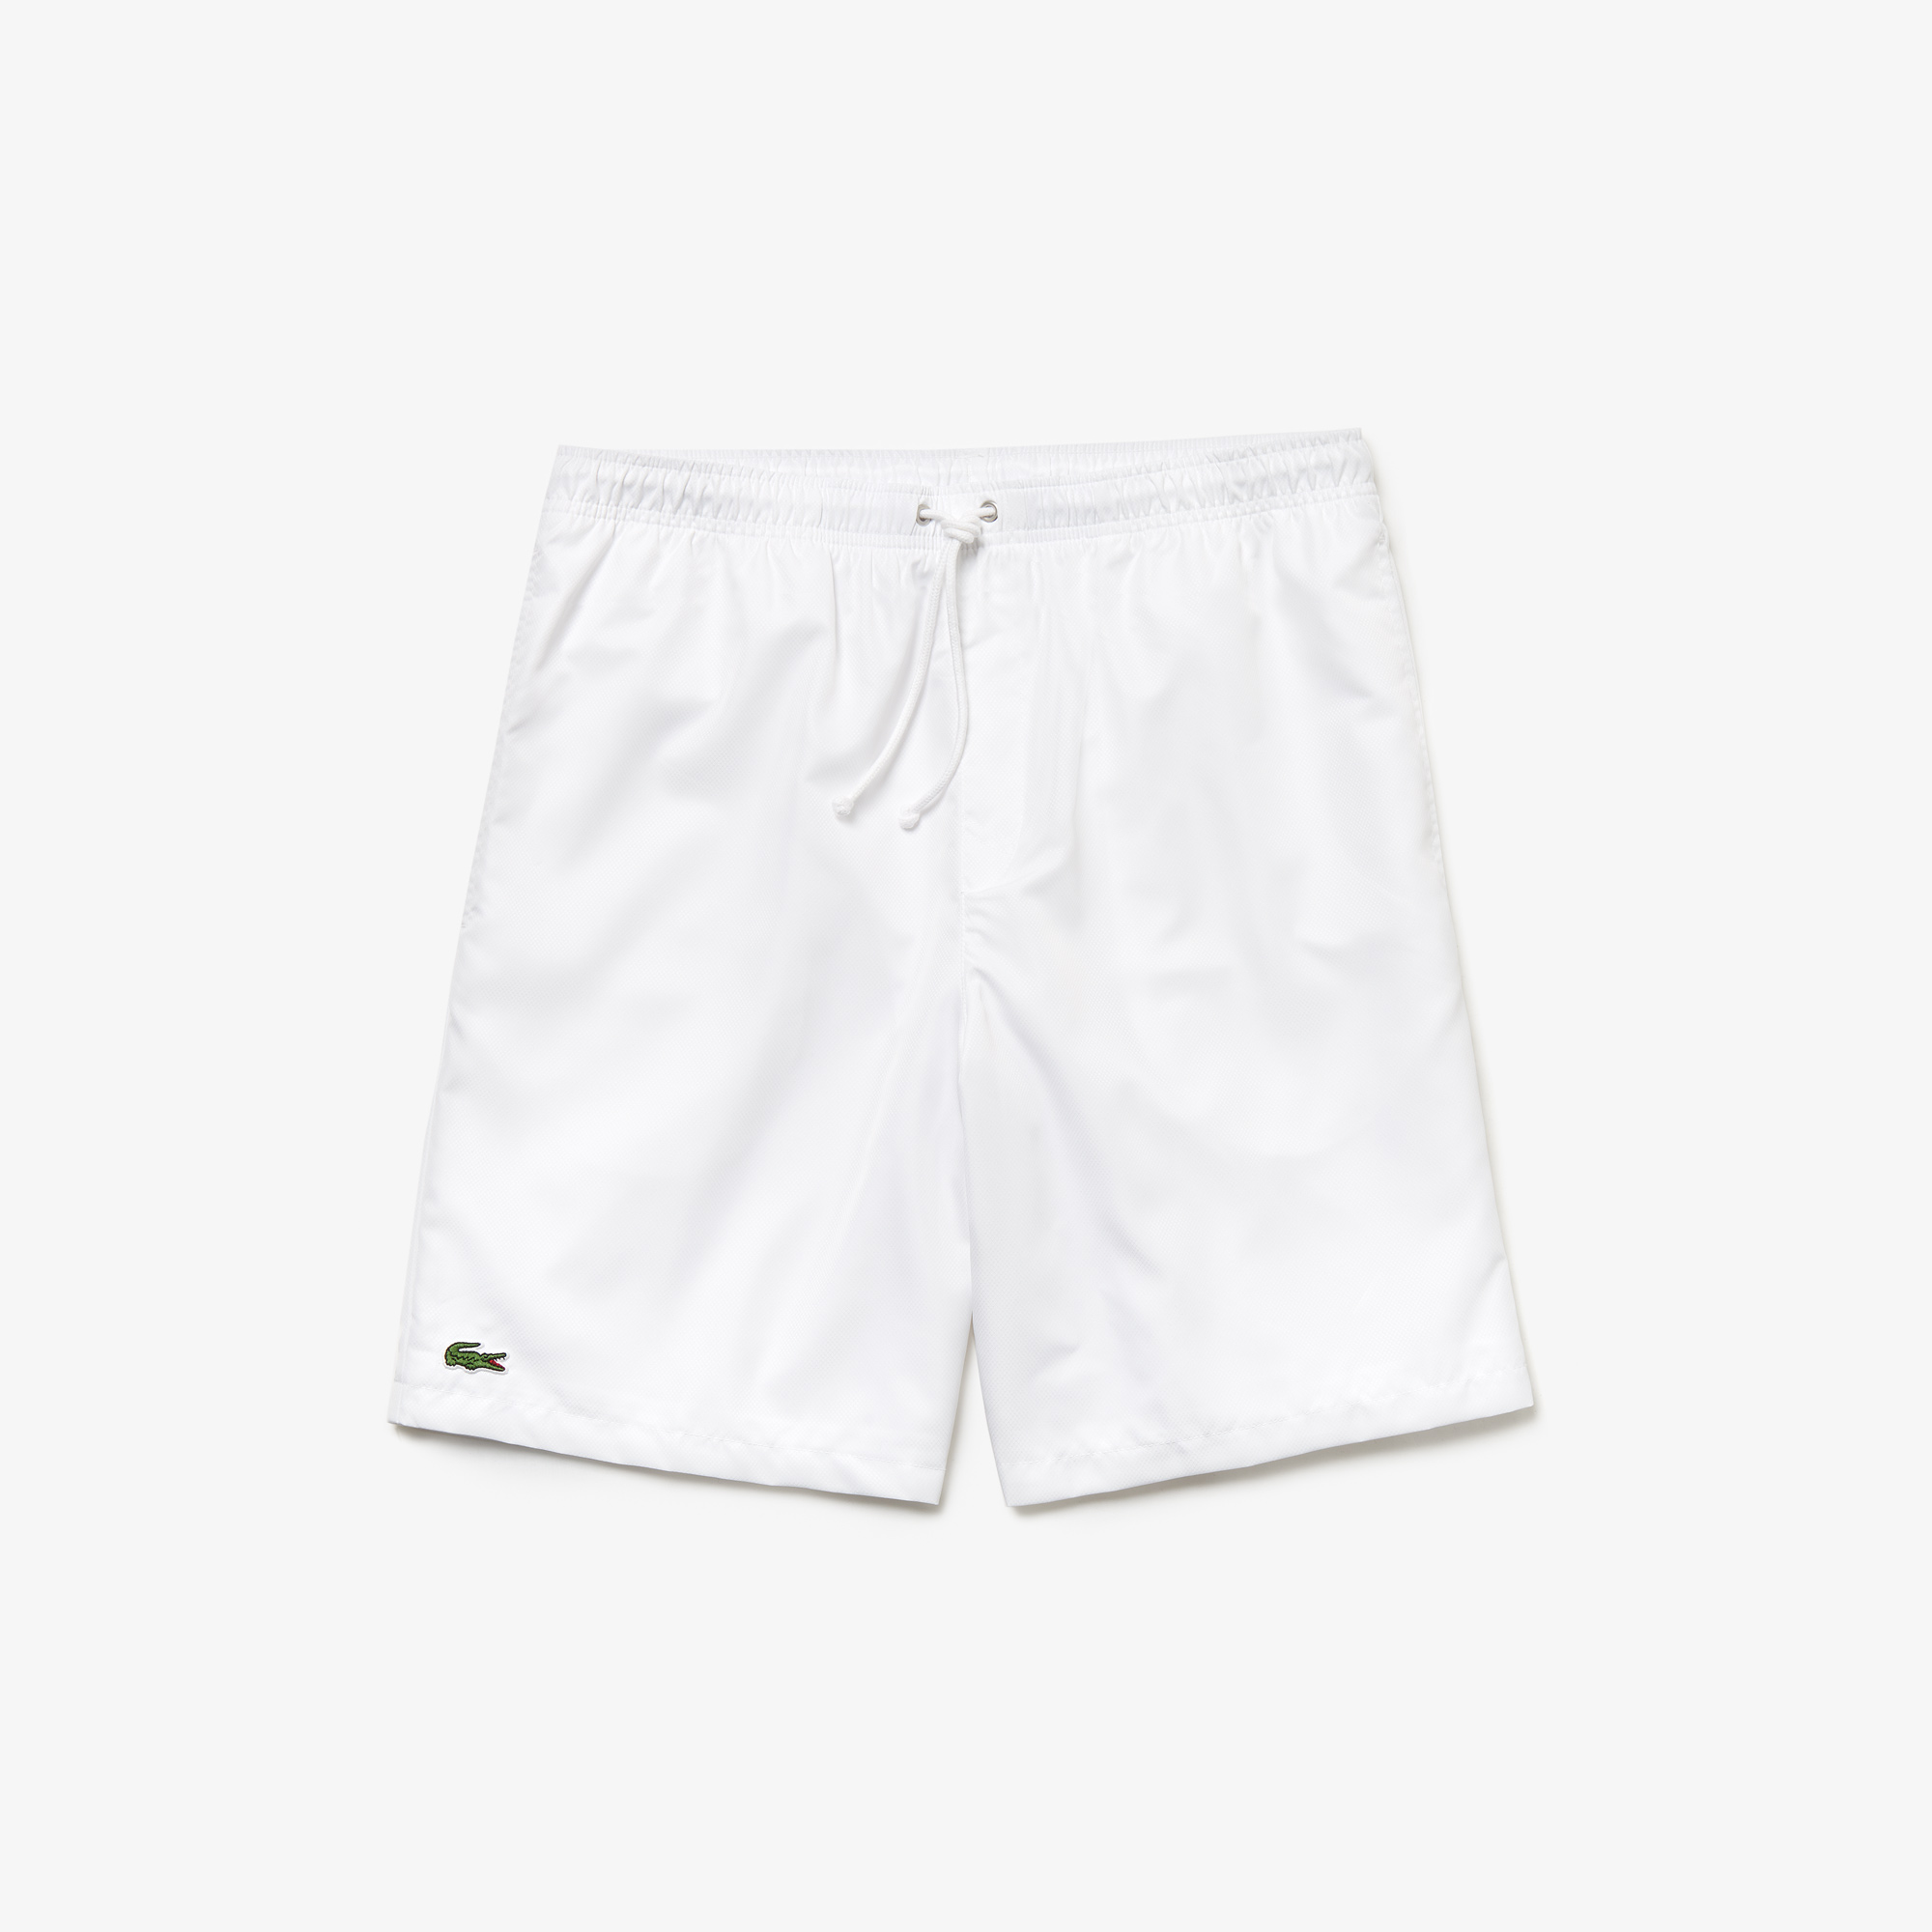 Lacoste Mens Team Shorts in White | Wigmore Sports